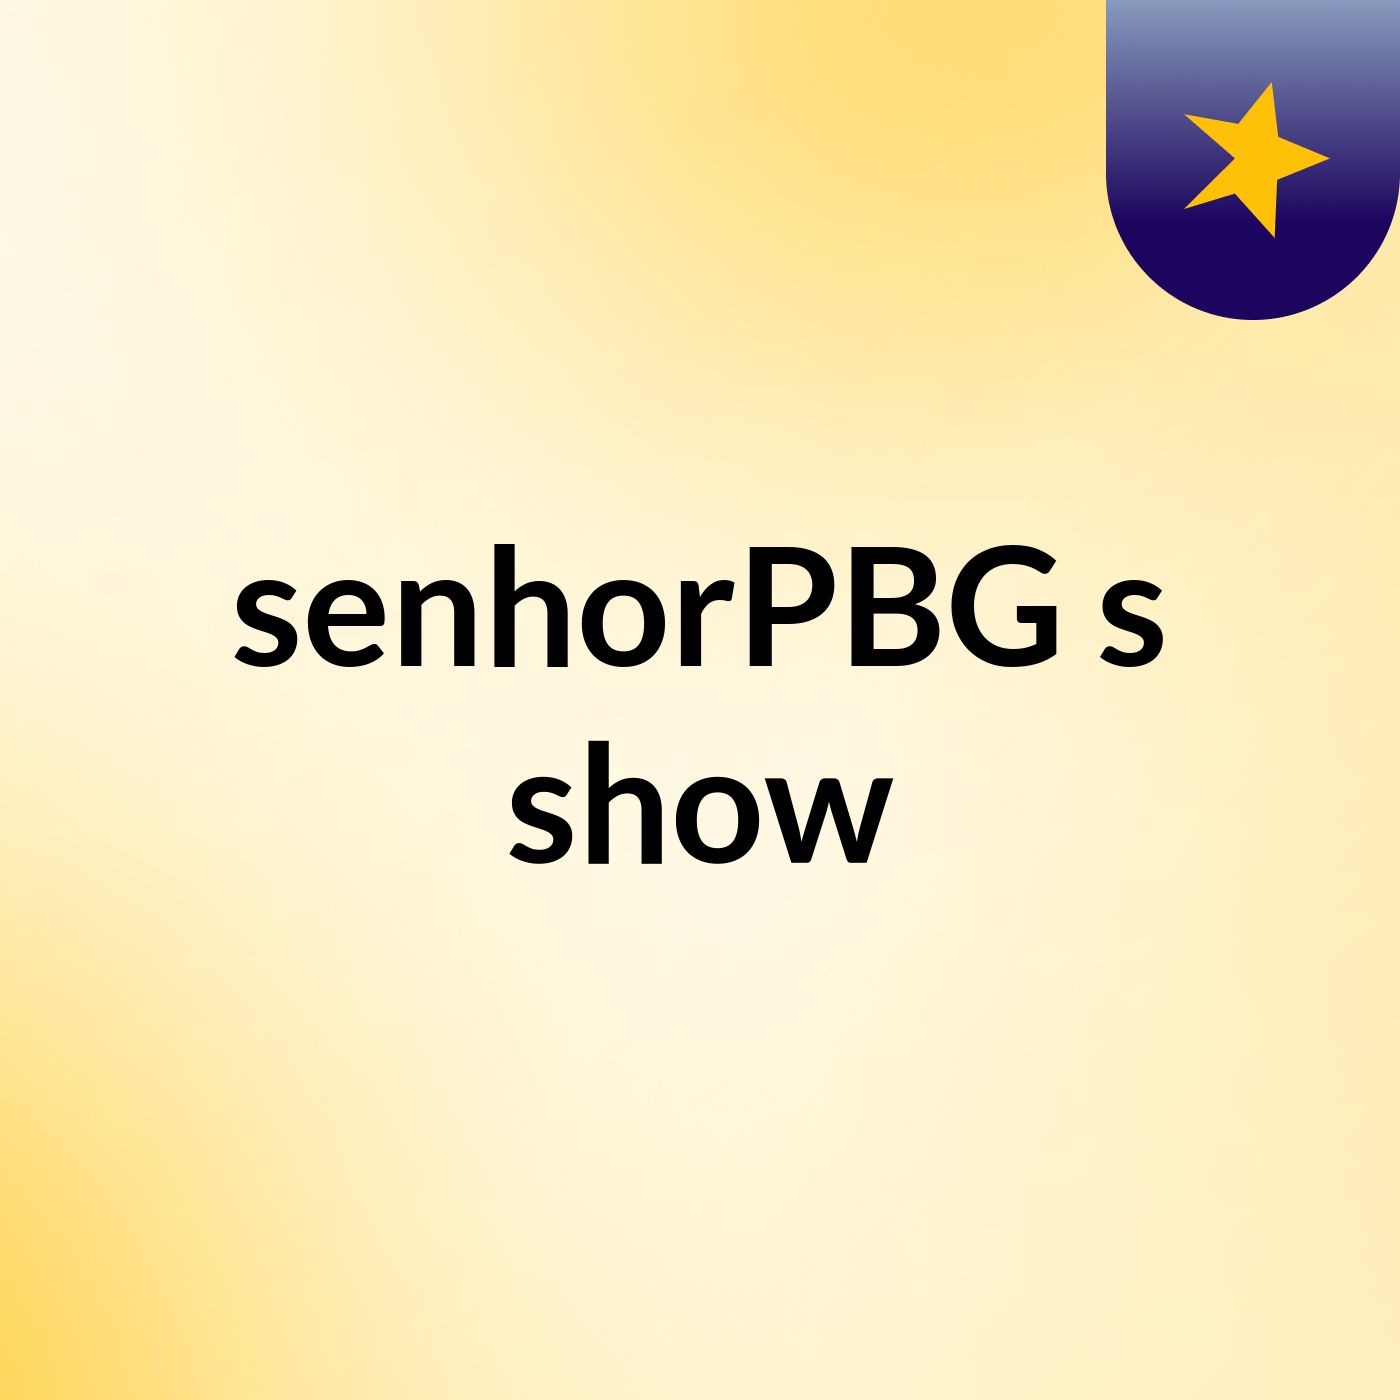 senhorPBG's show